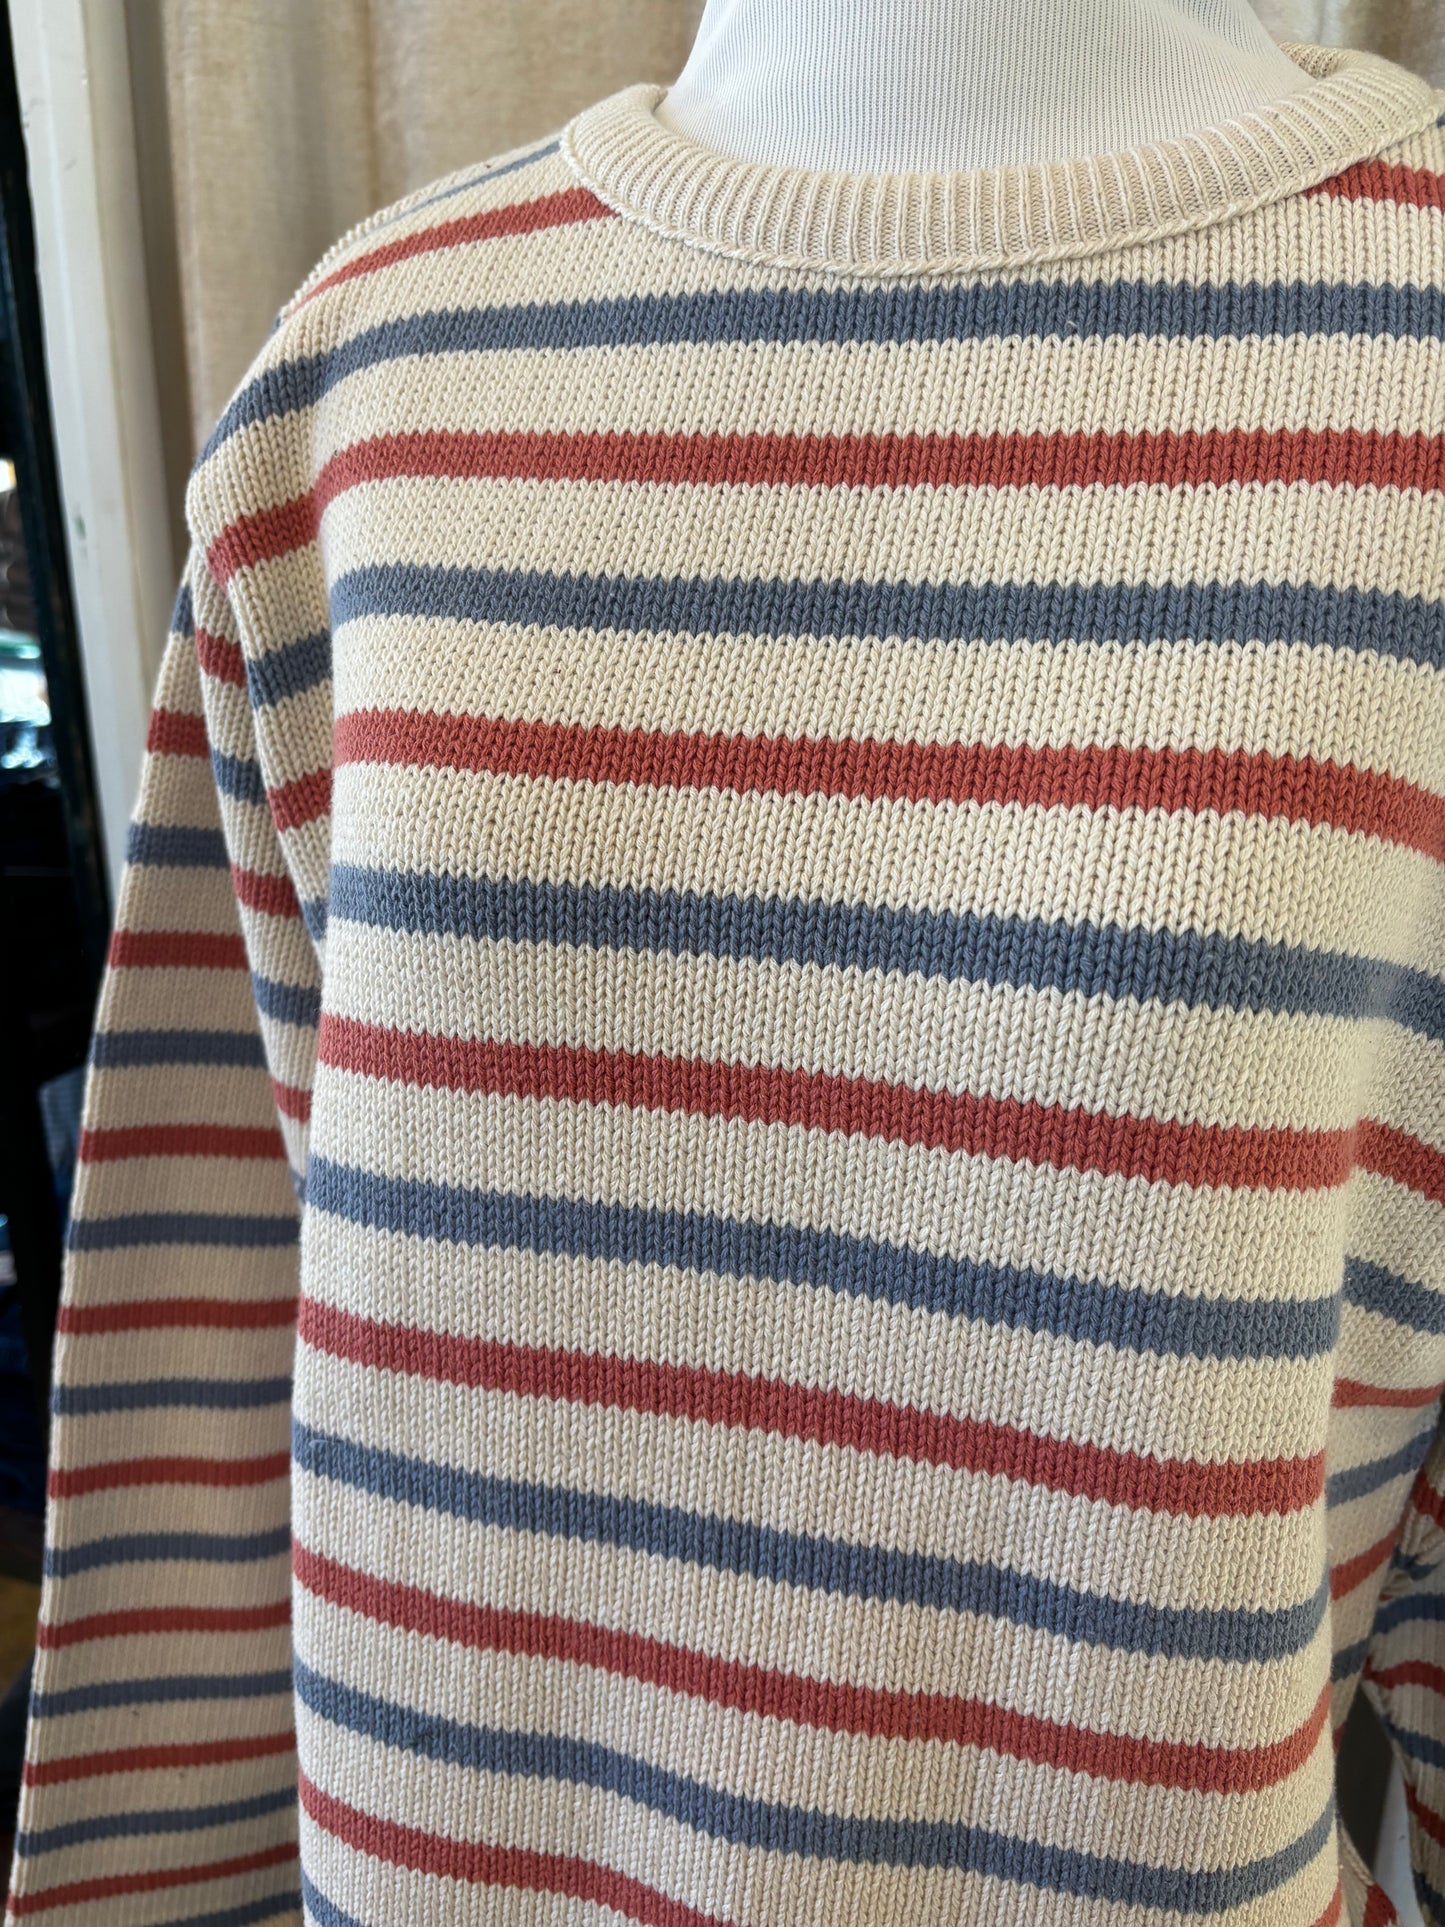 Striped Crew Sweater